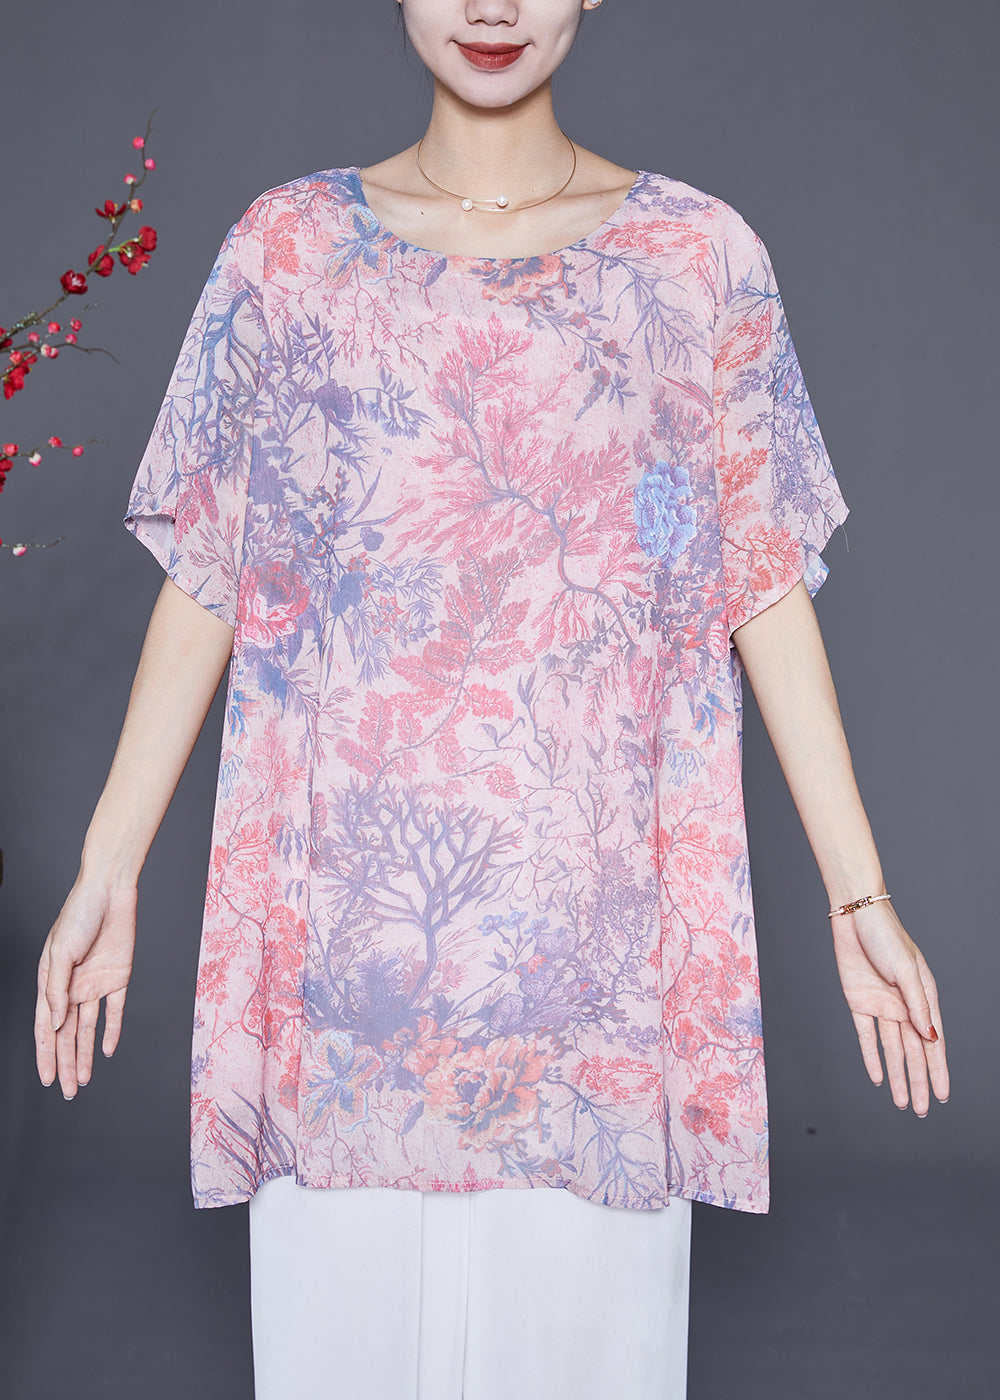 Pink Print Chiffon Blouse Top Oversized Draping Summer Ada Fashion